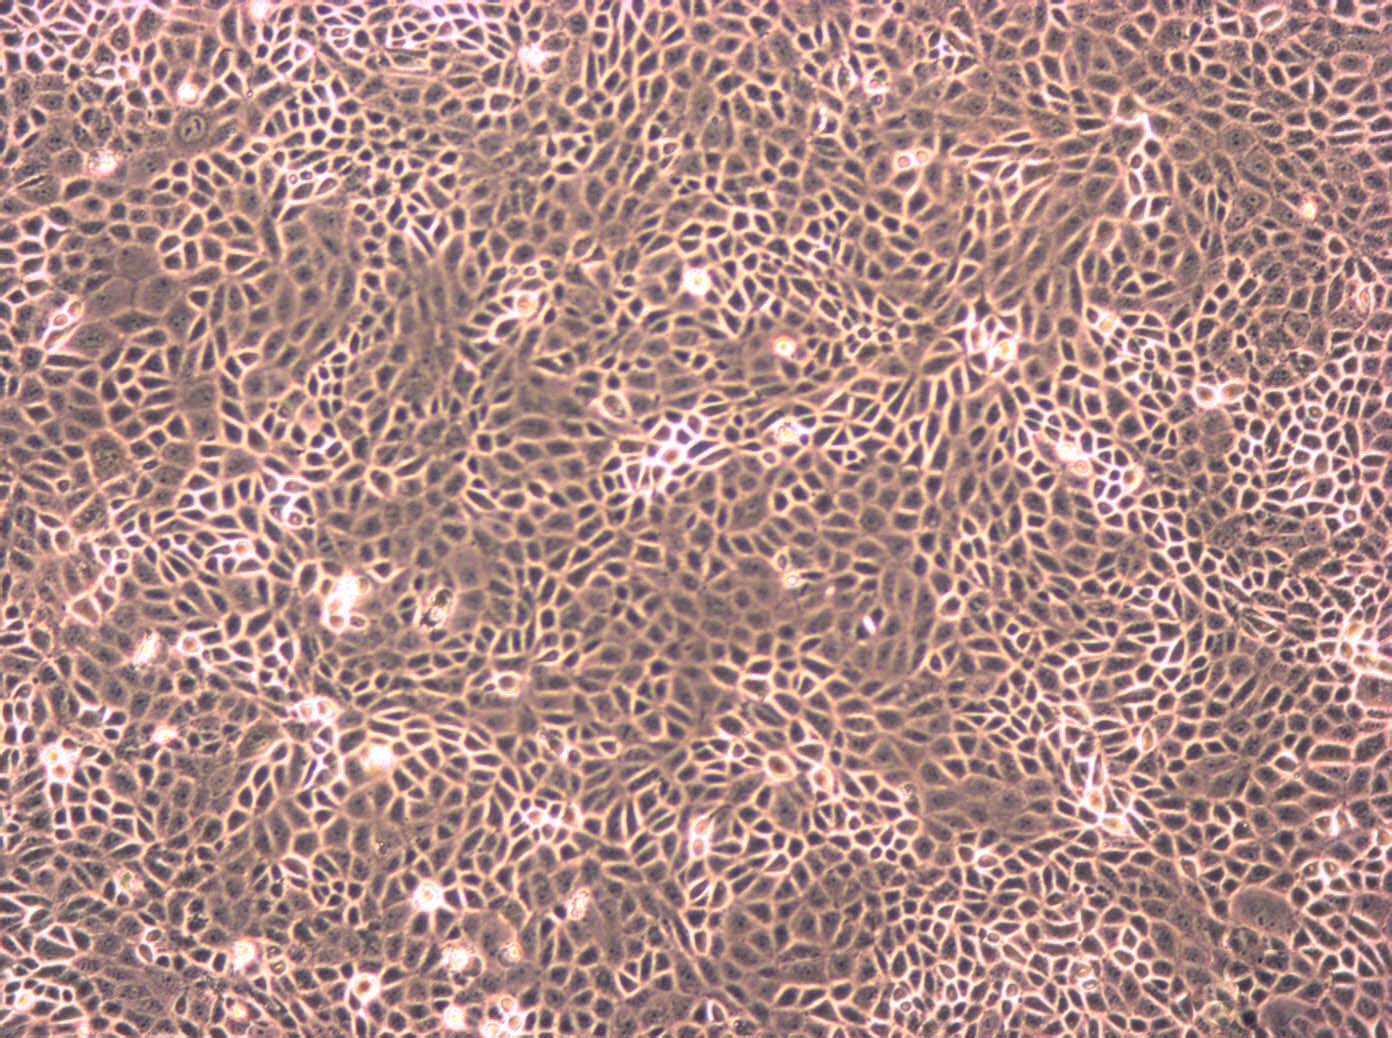 COLO 16 epithelioid cells人皮肤鳞癌细胞系,COLO 16 epithelioid cells